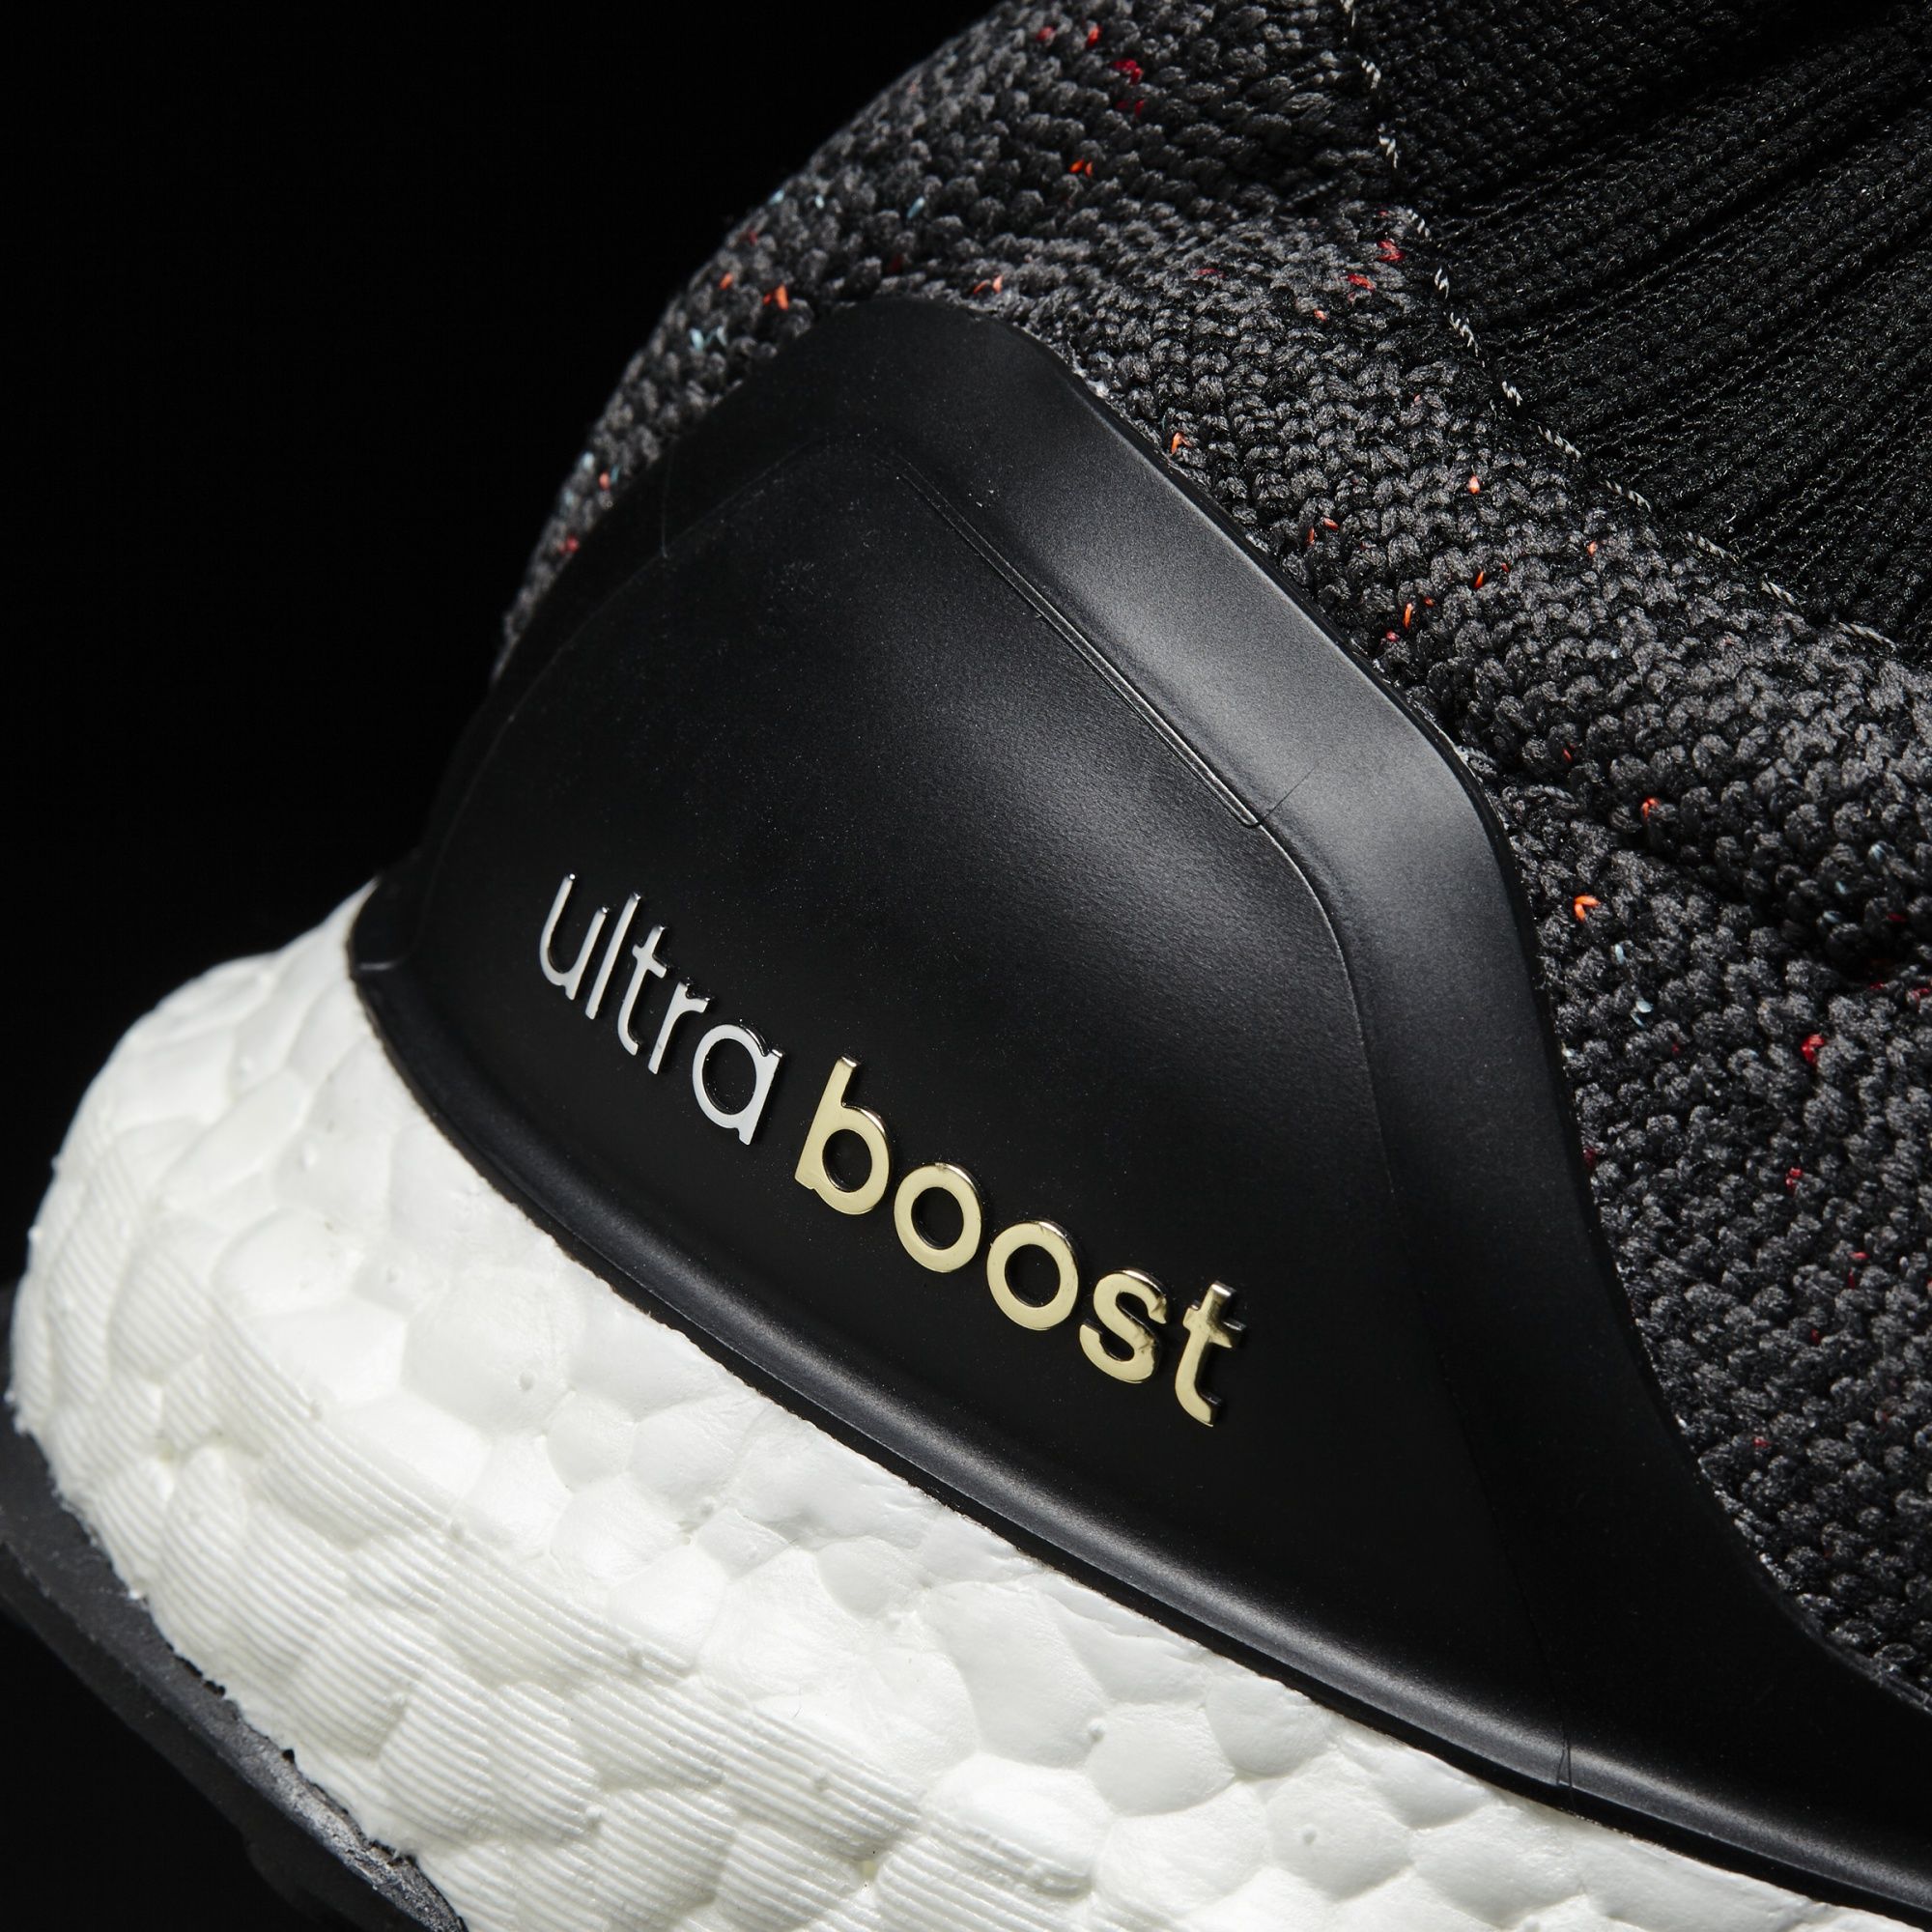 Adidas Ultra Boost Uncaged
Core Black / Multi-Color